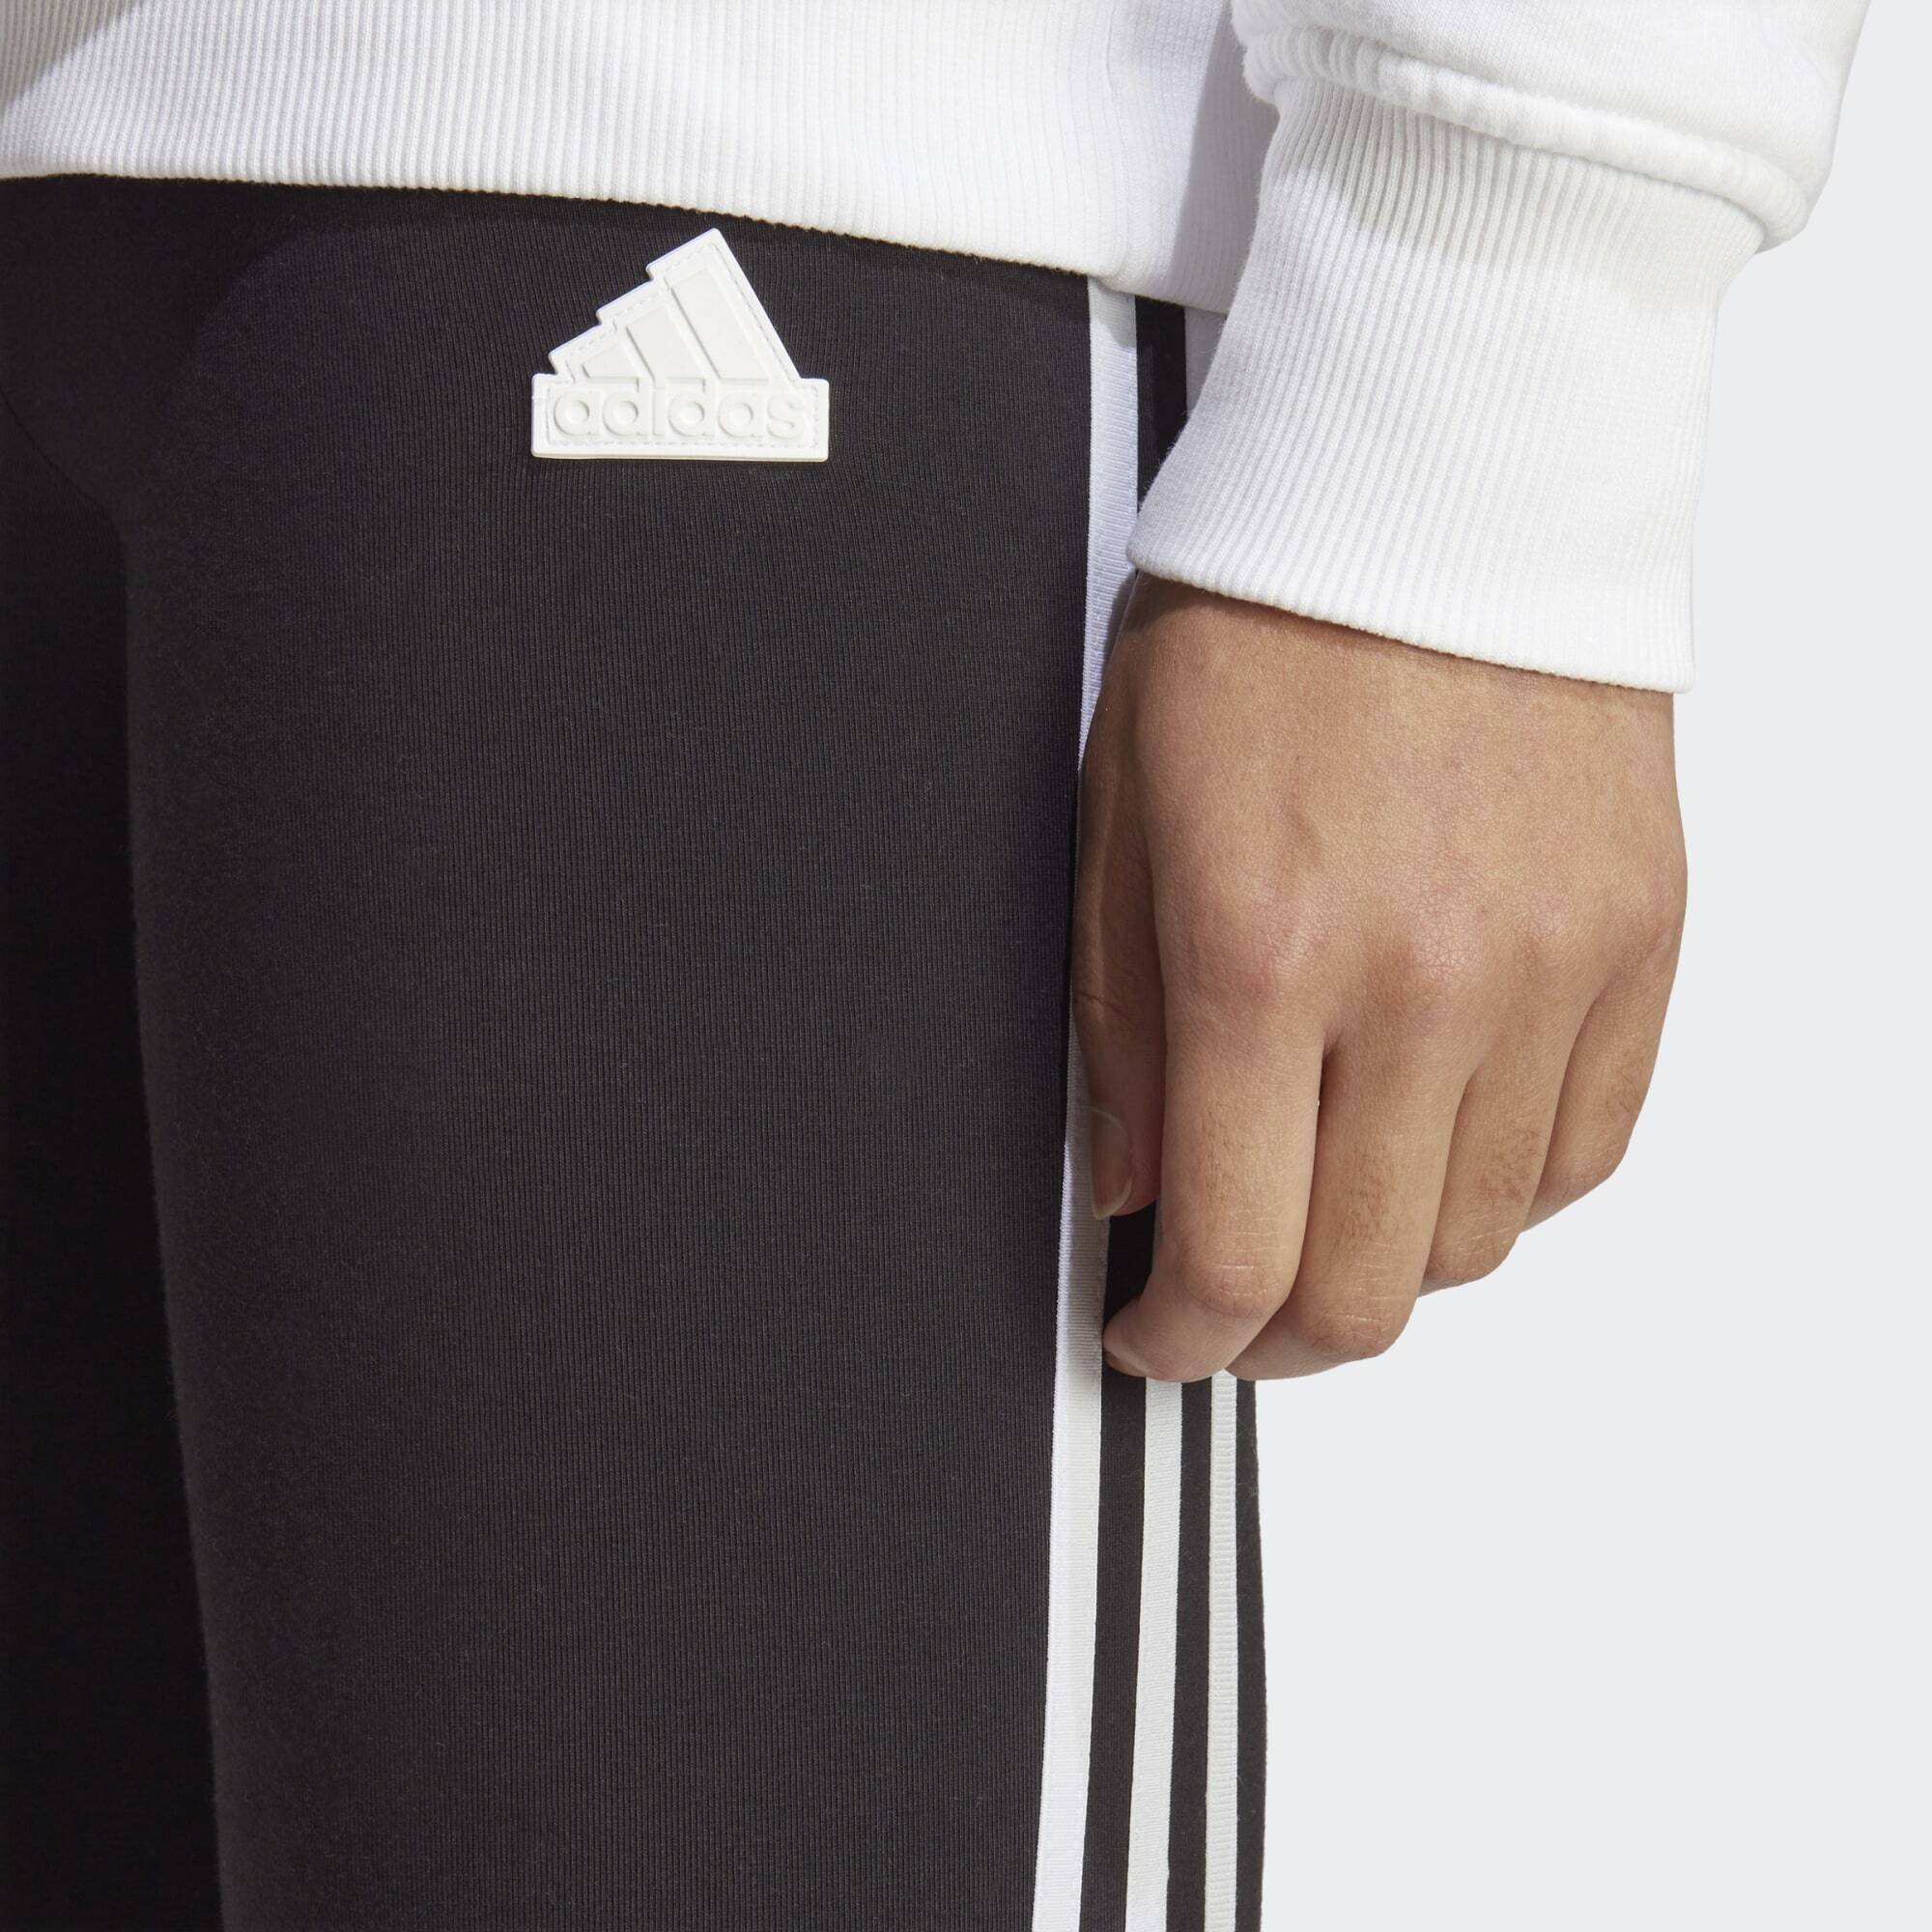 Leggings FUTURE LEGGINGS schwarz ICONS Sportswear adidas 3-STREIFEN weiß /